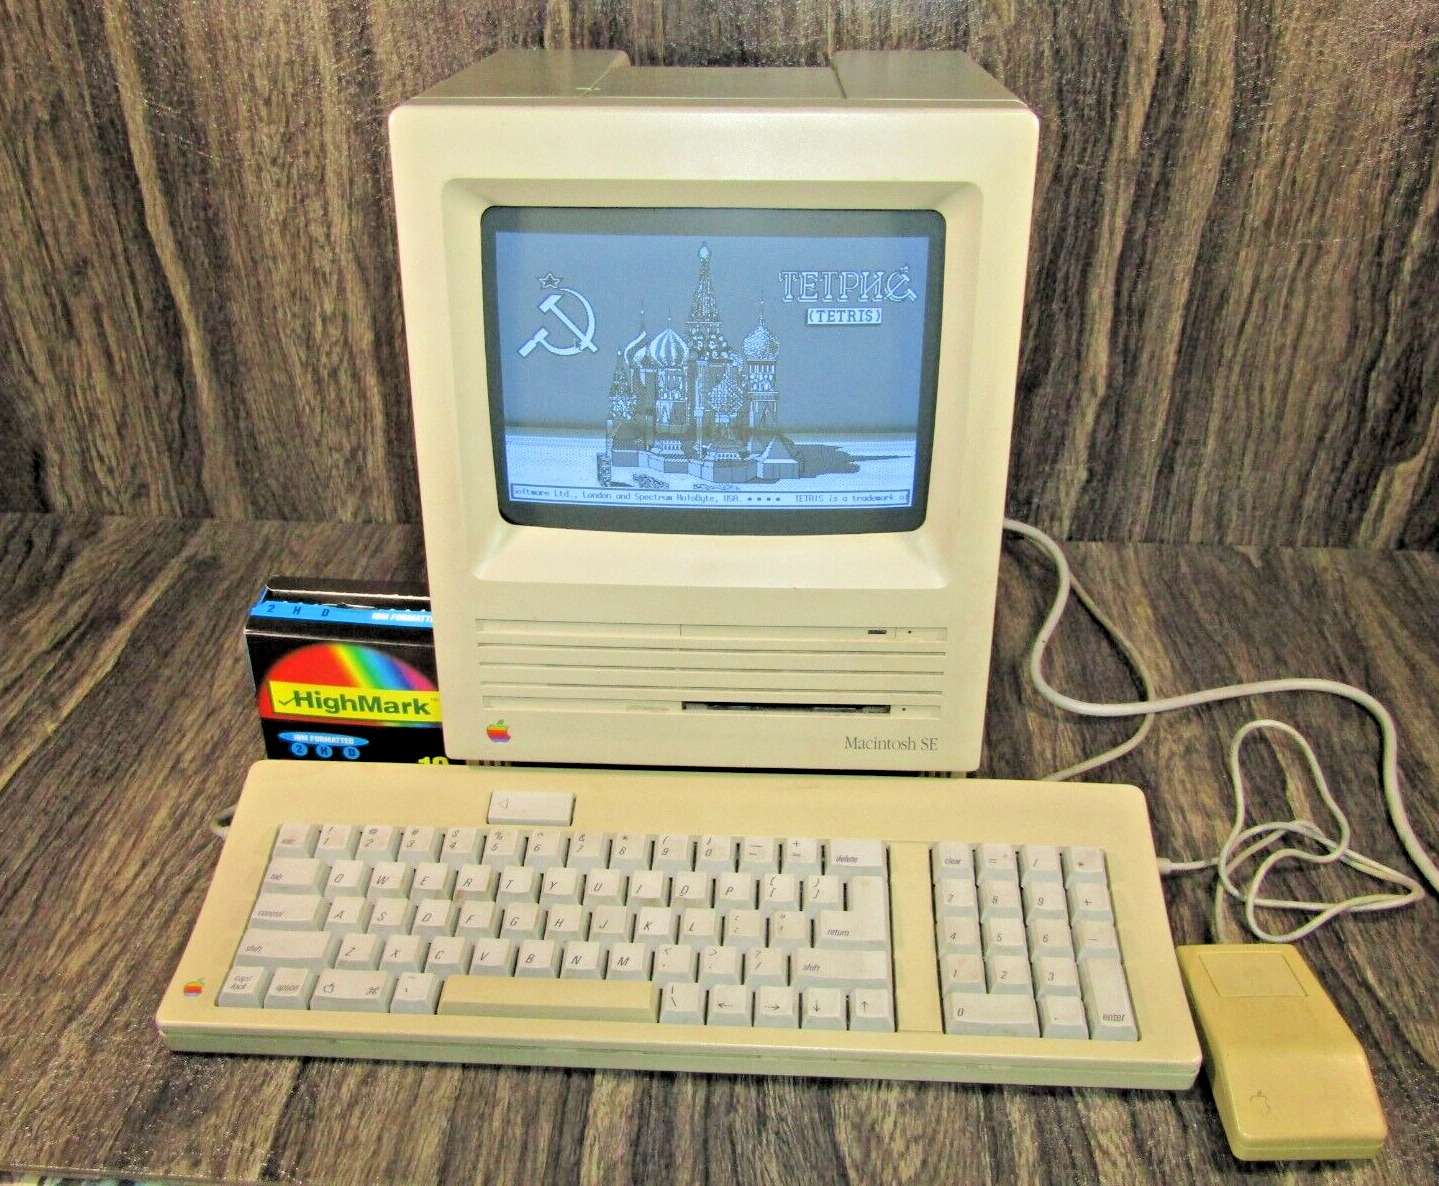 1986 Apple Macintosh SE Model M5011 1 Mb Ram 800K Drive Vintage Working Computer